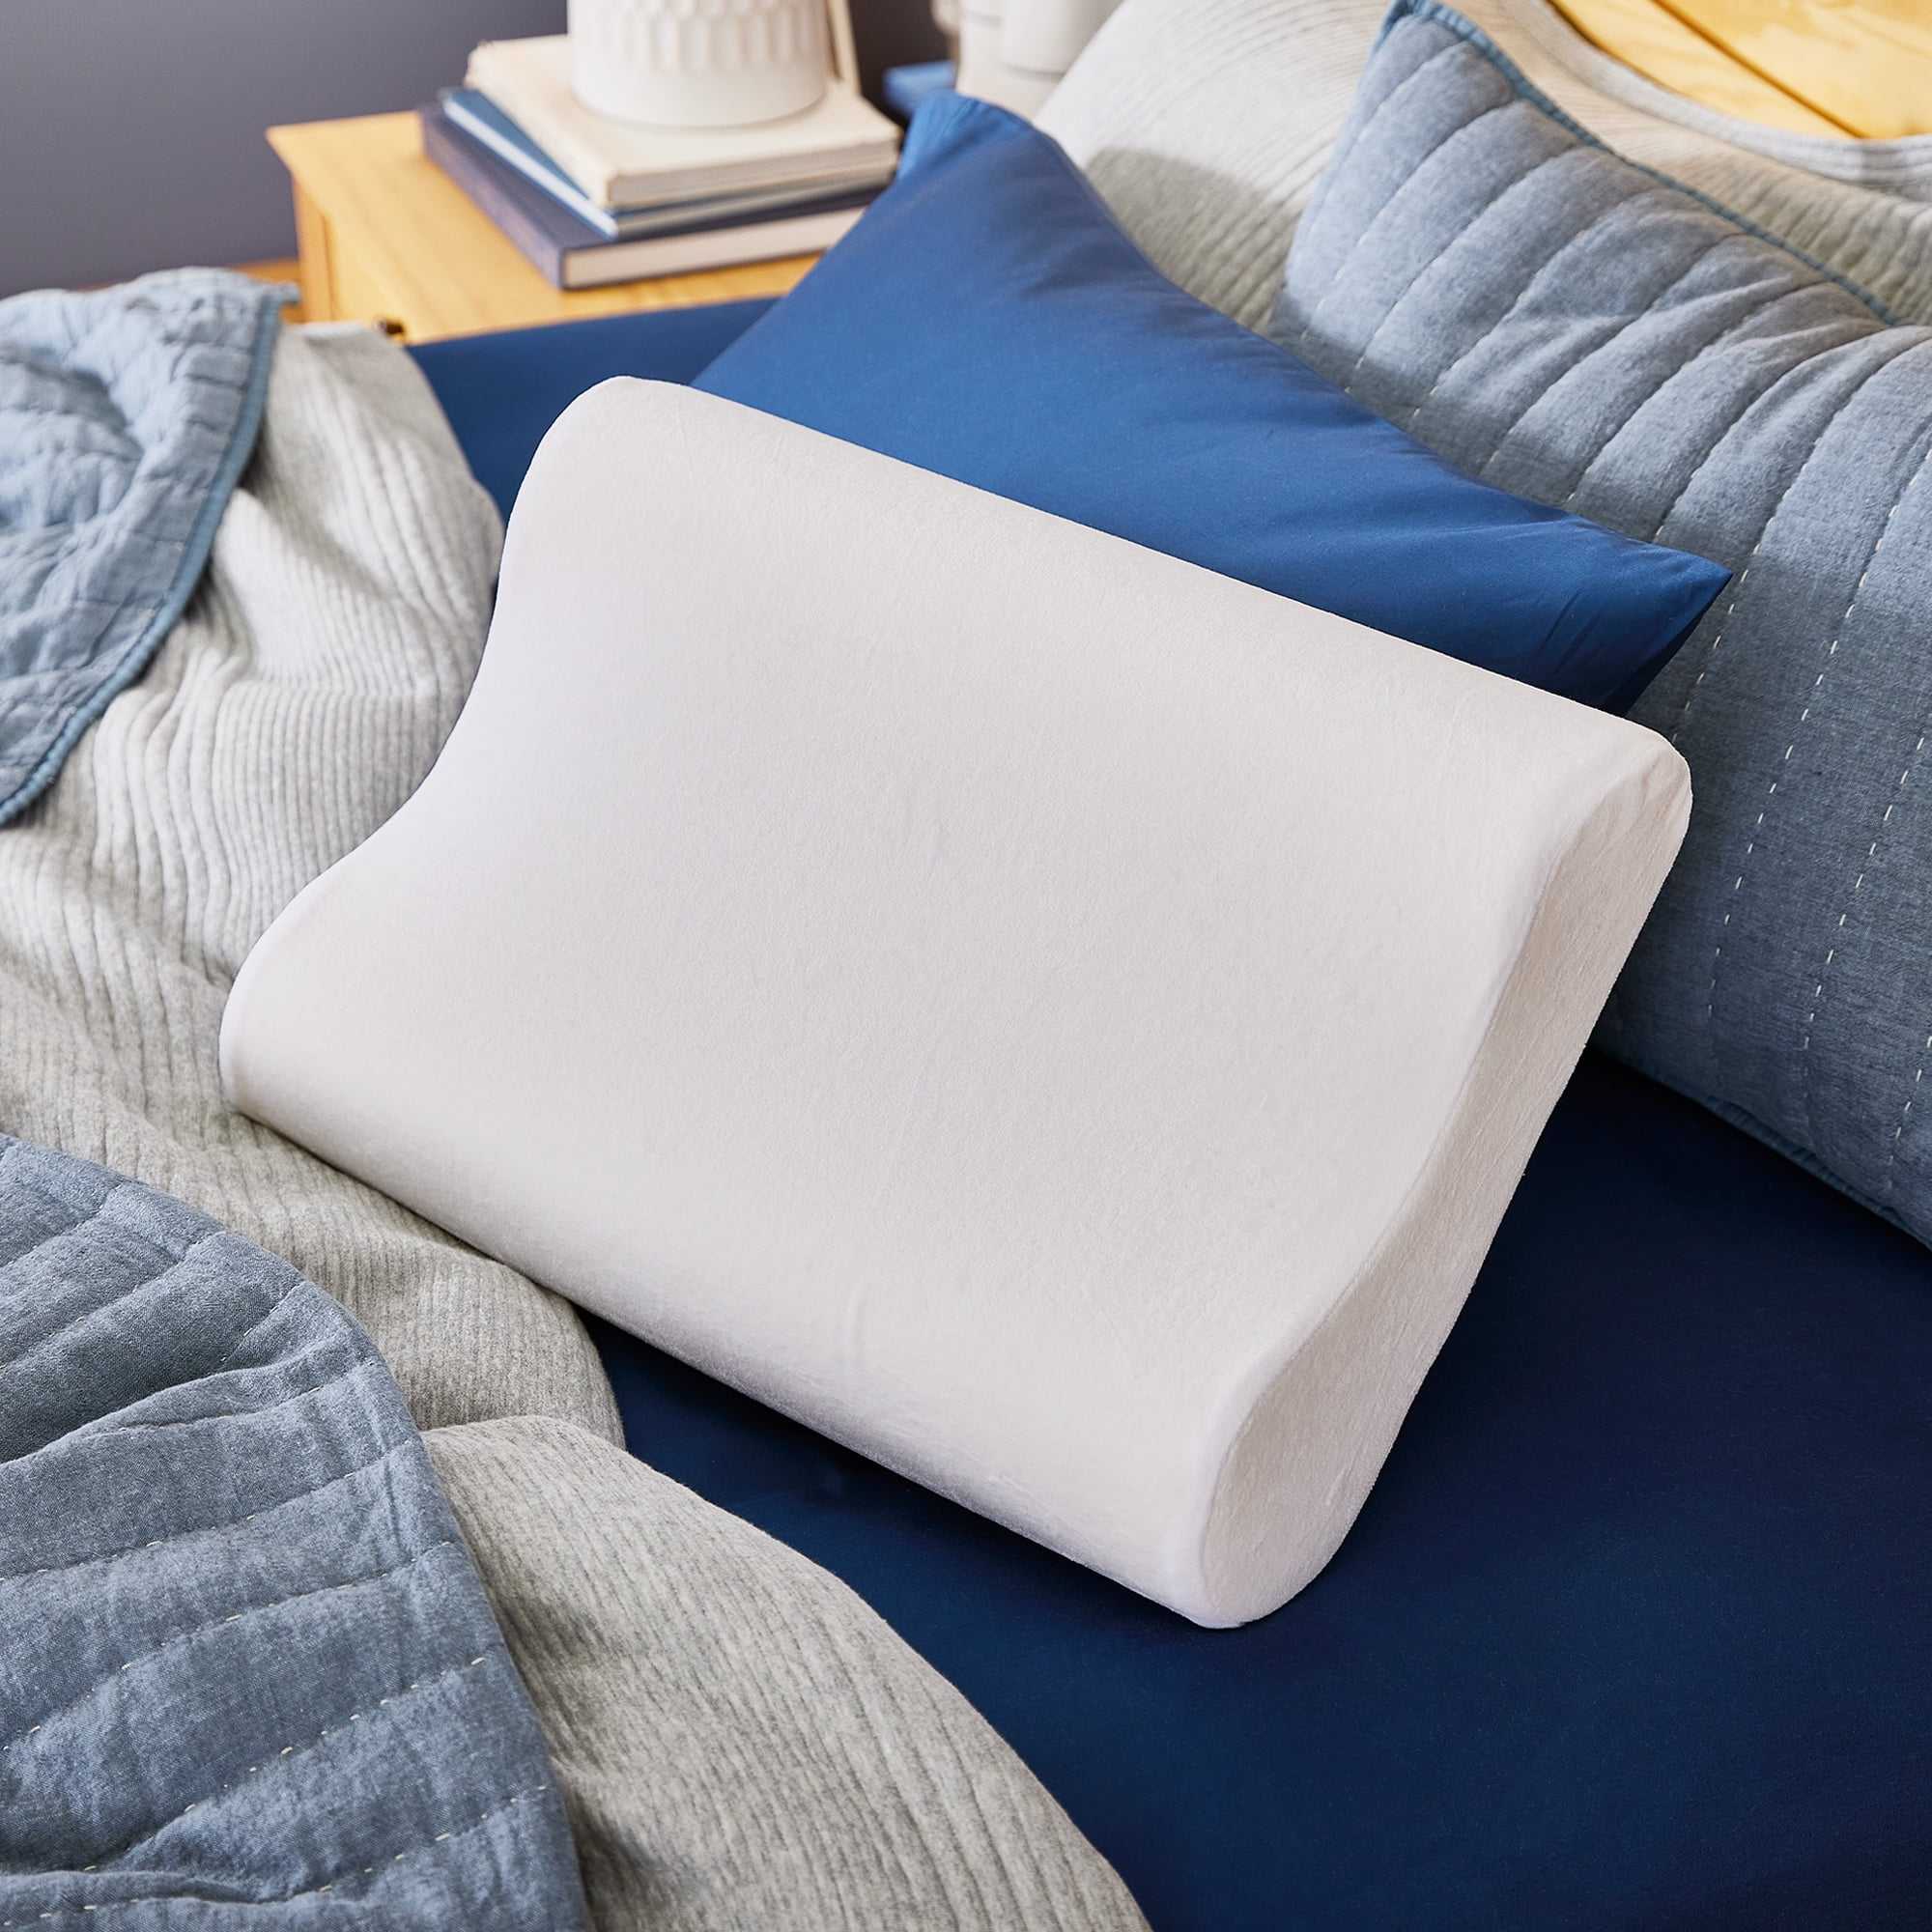 Sleep Innovations Contour Pillow